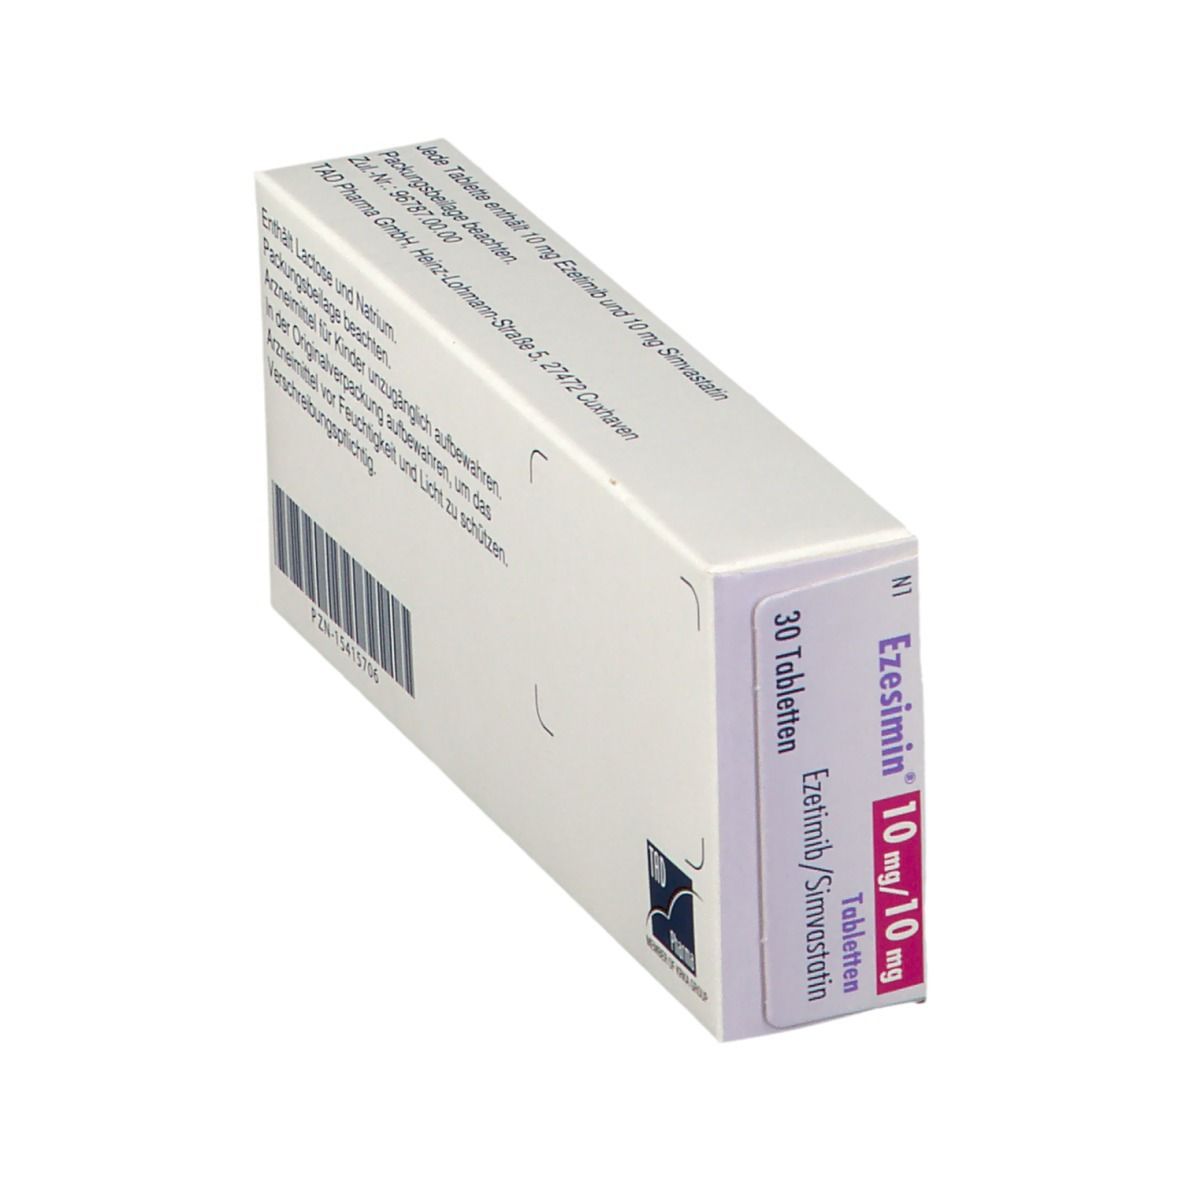 Ezesimin® 10 mg/10 mg